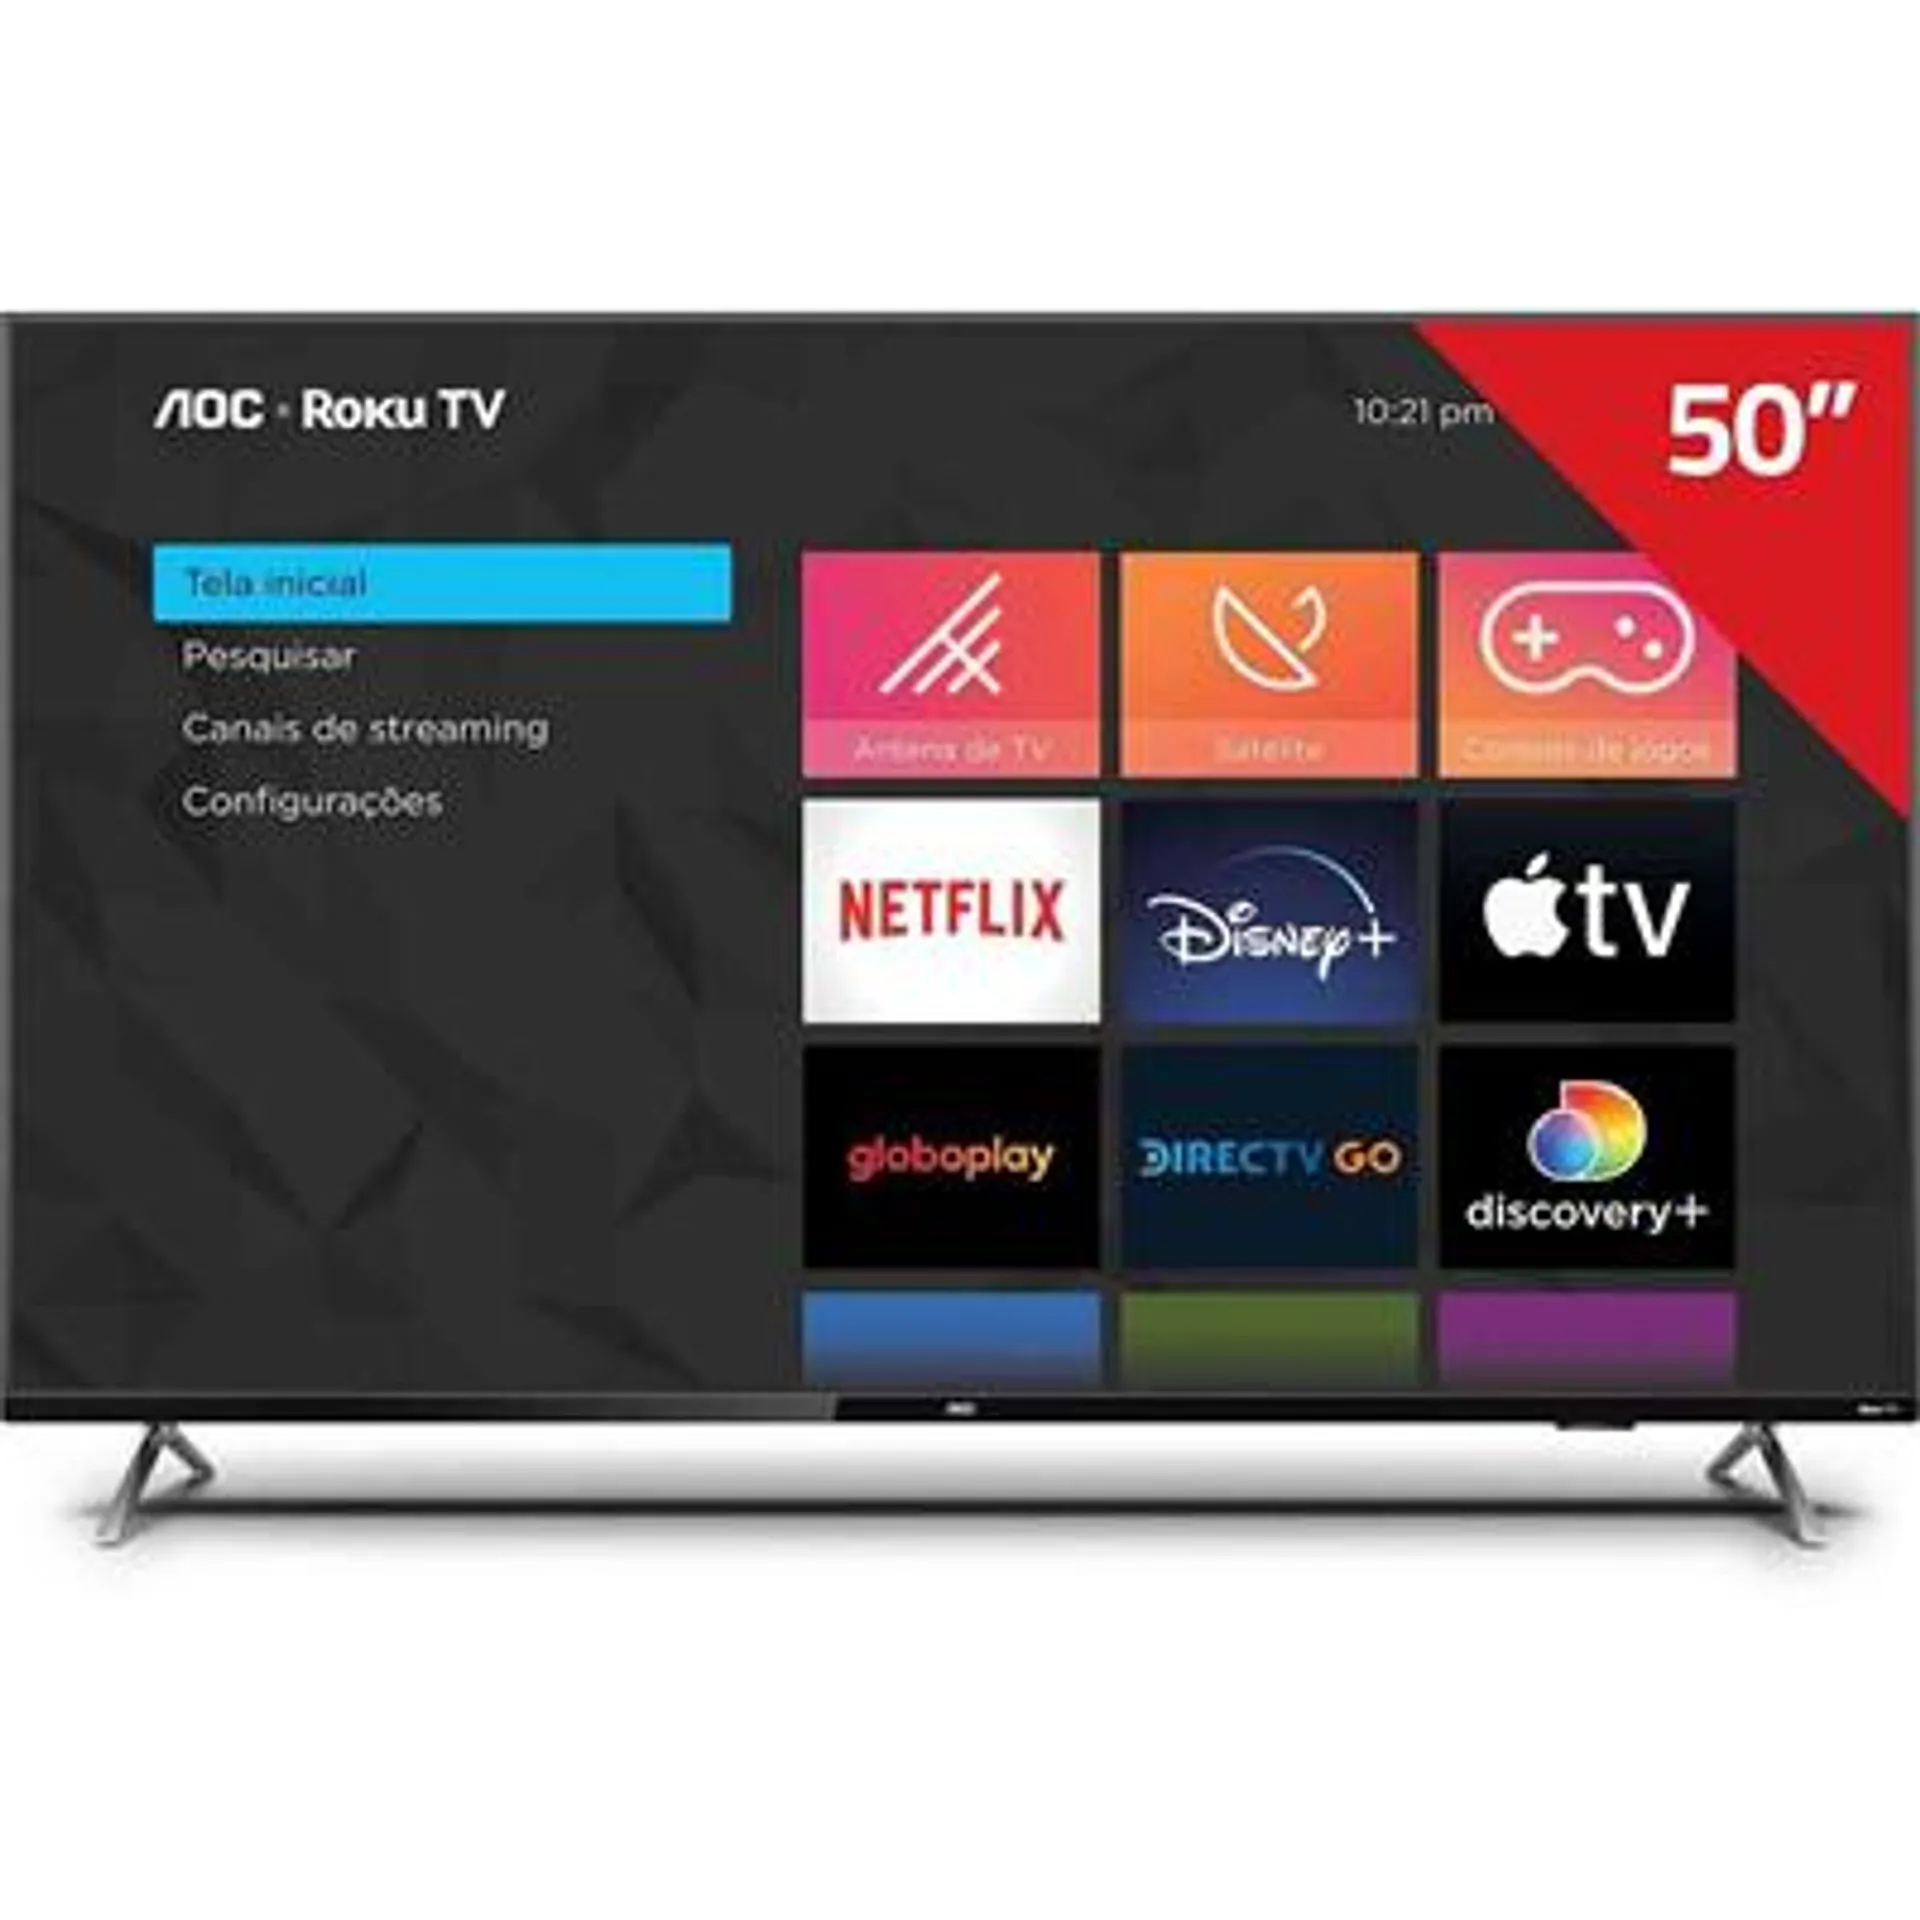 Smart TV AOC DLED 50" Roku 4K UHD HDR10+ Google Assistant Bordas Ultrafinas 50U6125/78